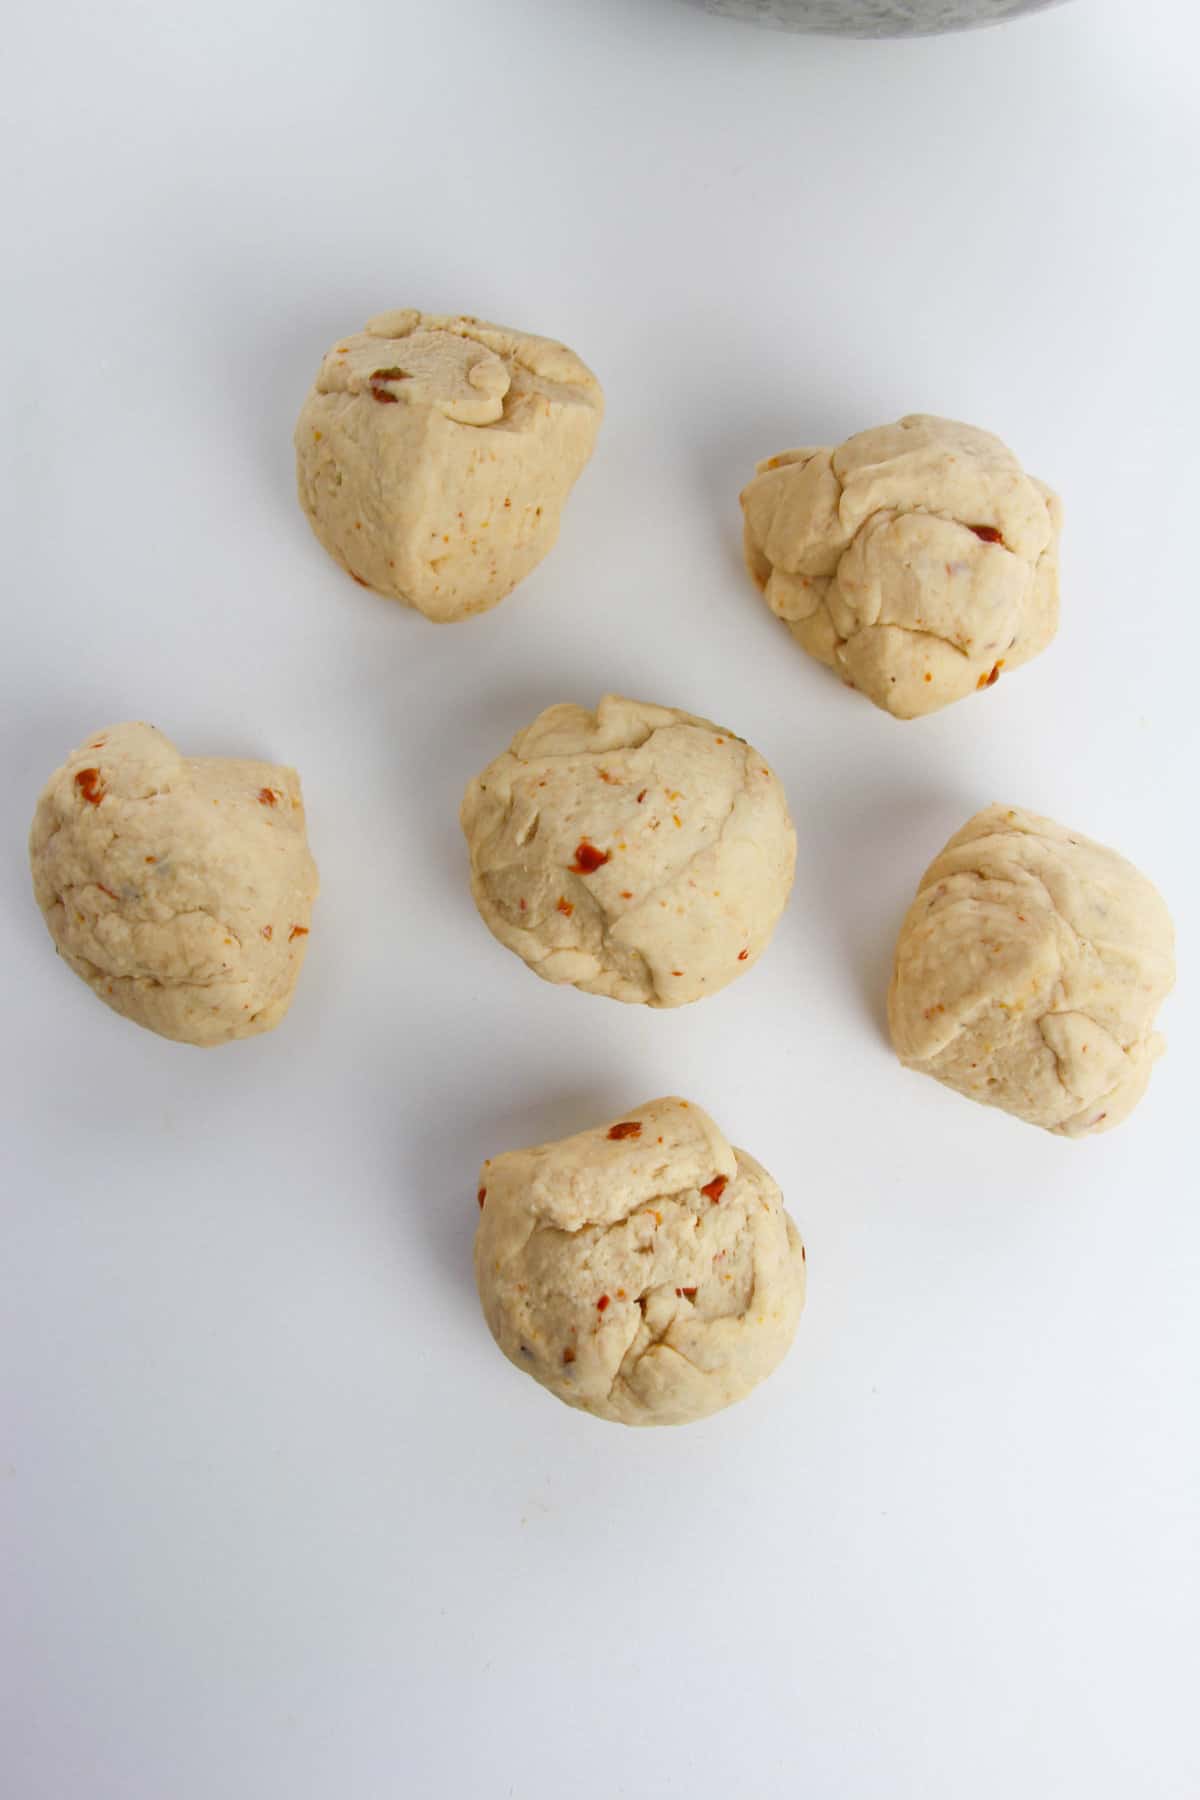 dough divided into 6 balls.